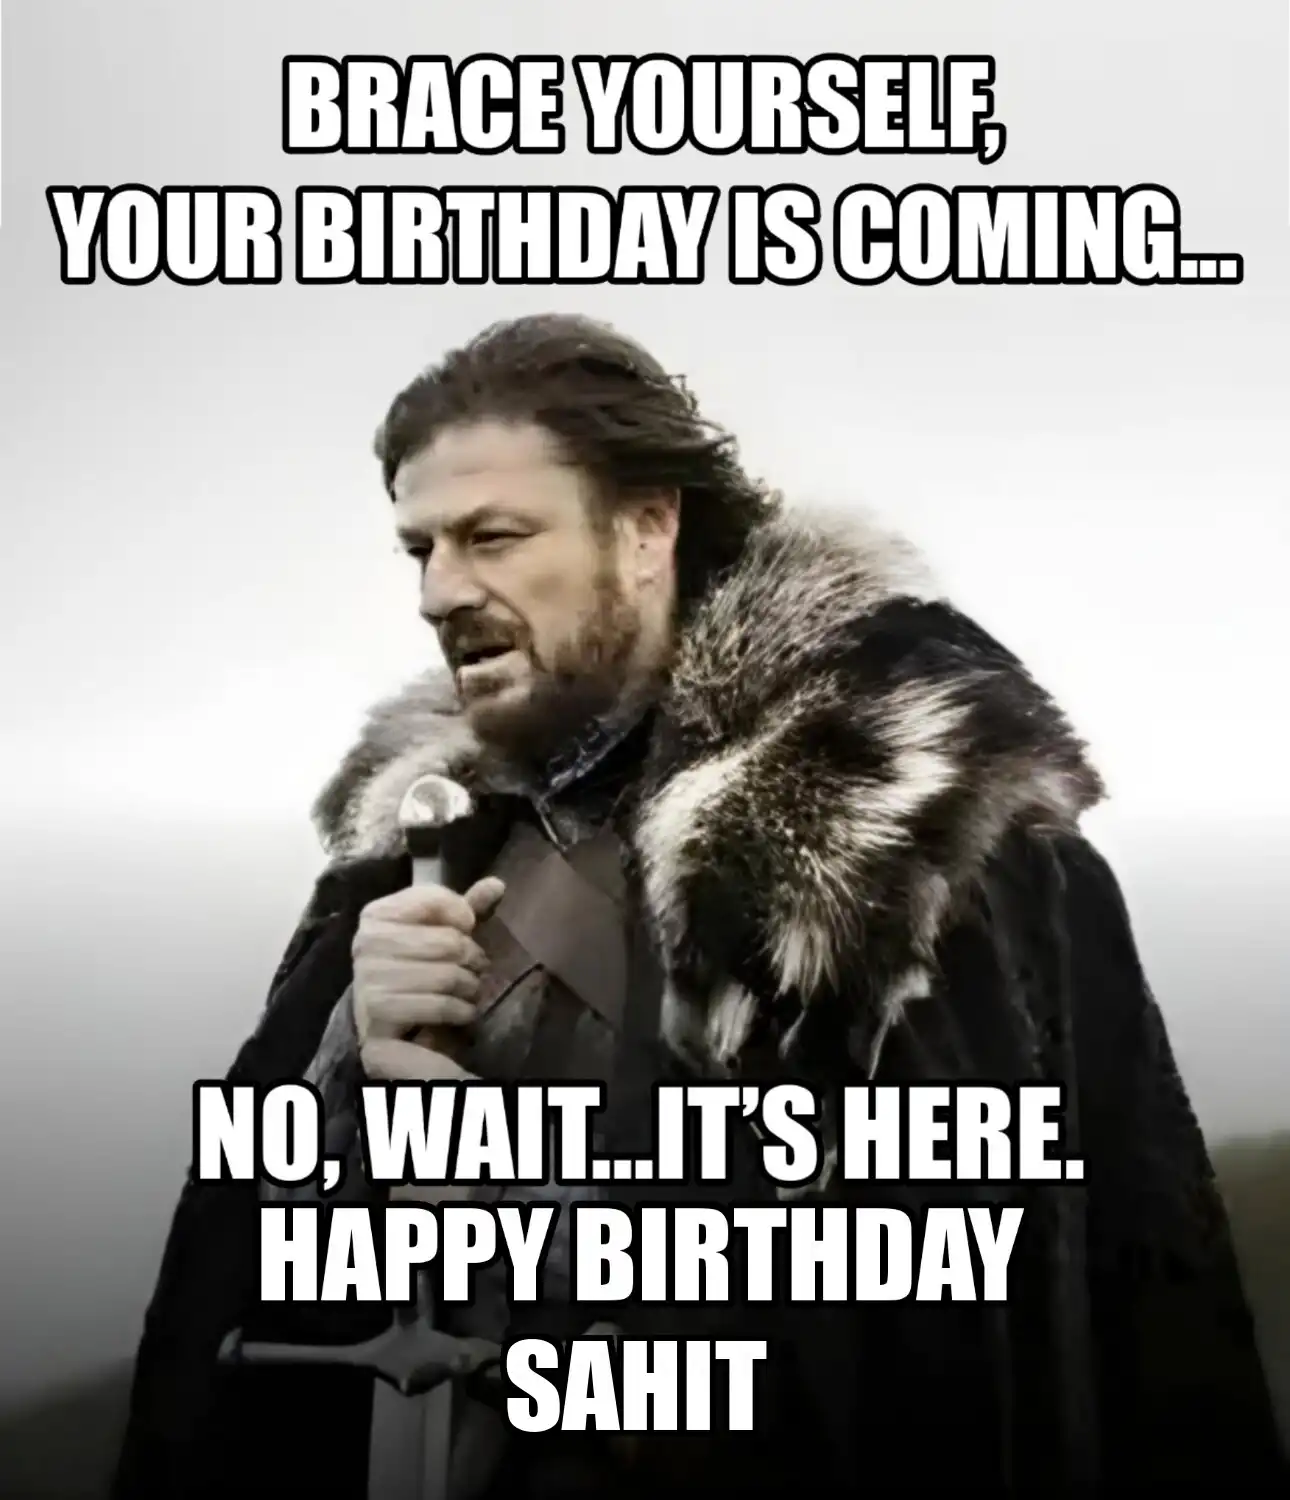 Happy Birthday Sahit Brace Yourself Your Birthday Is Coming Meme